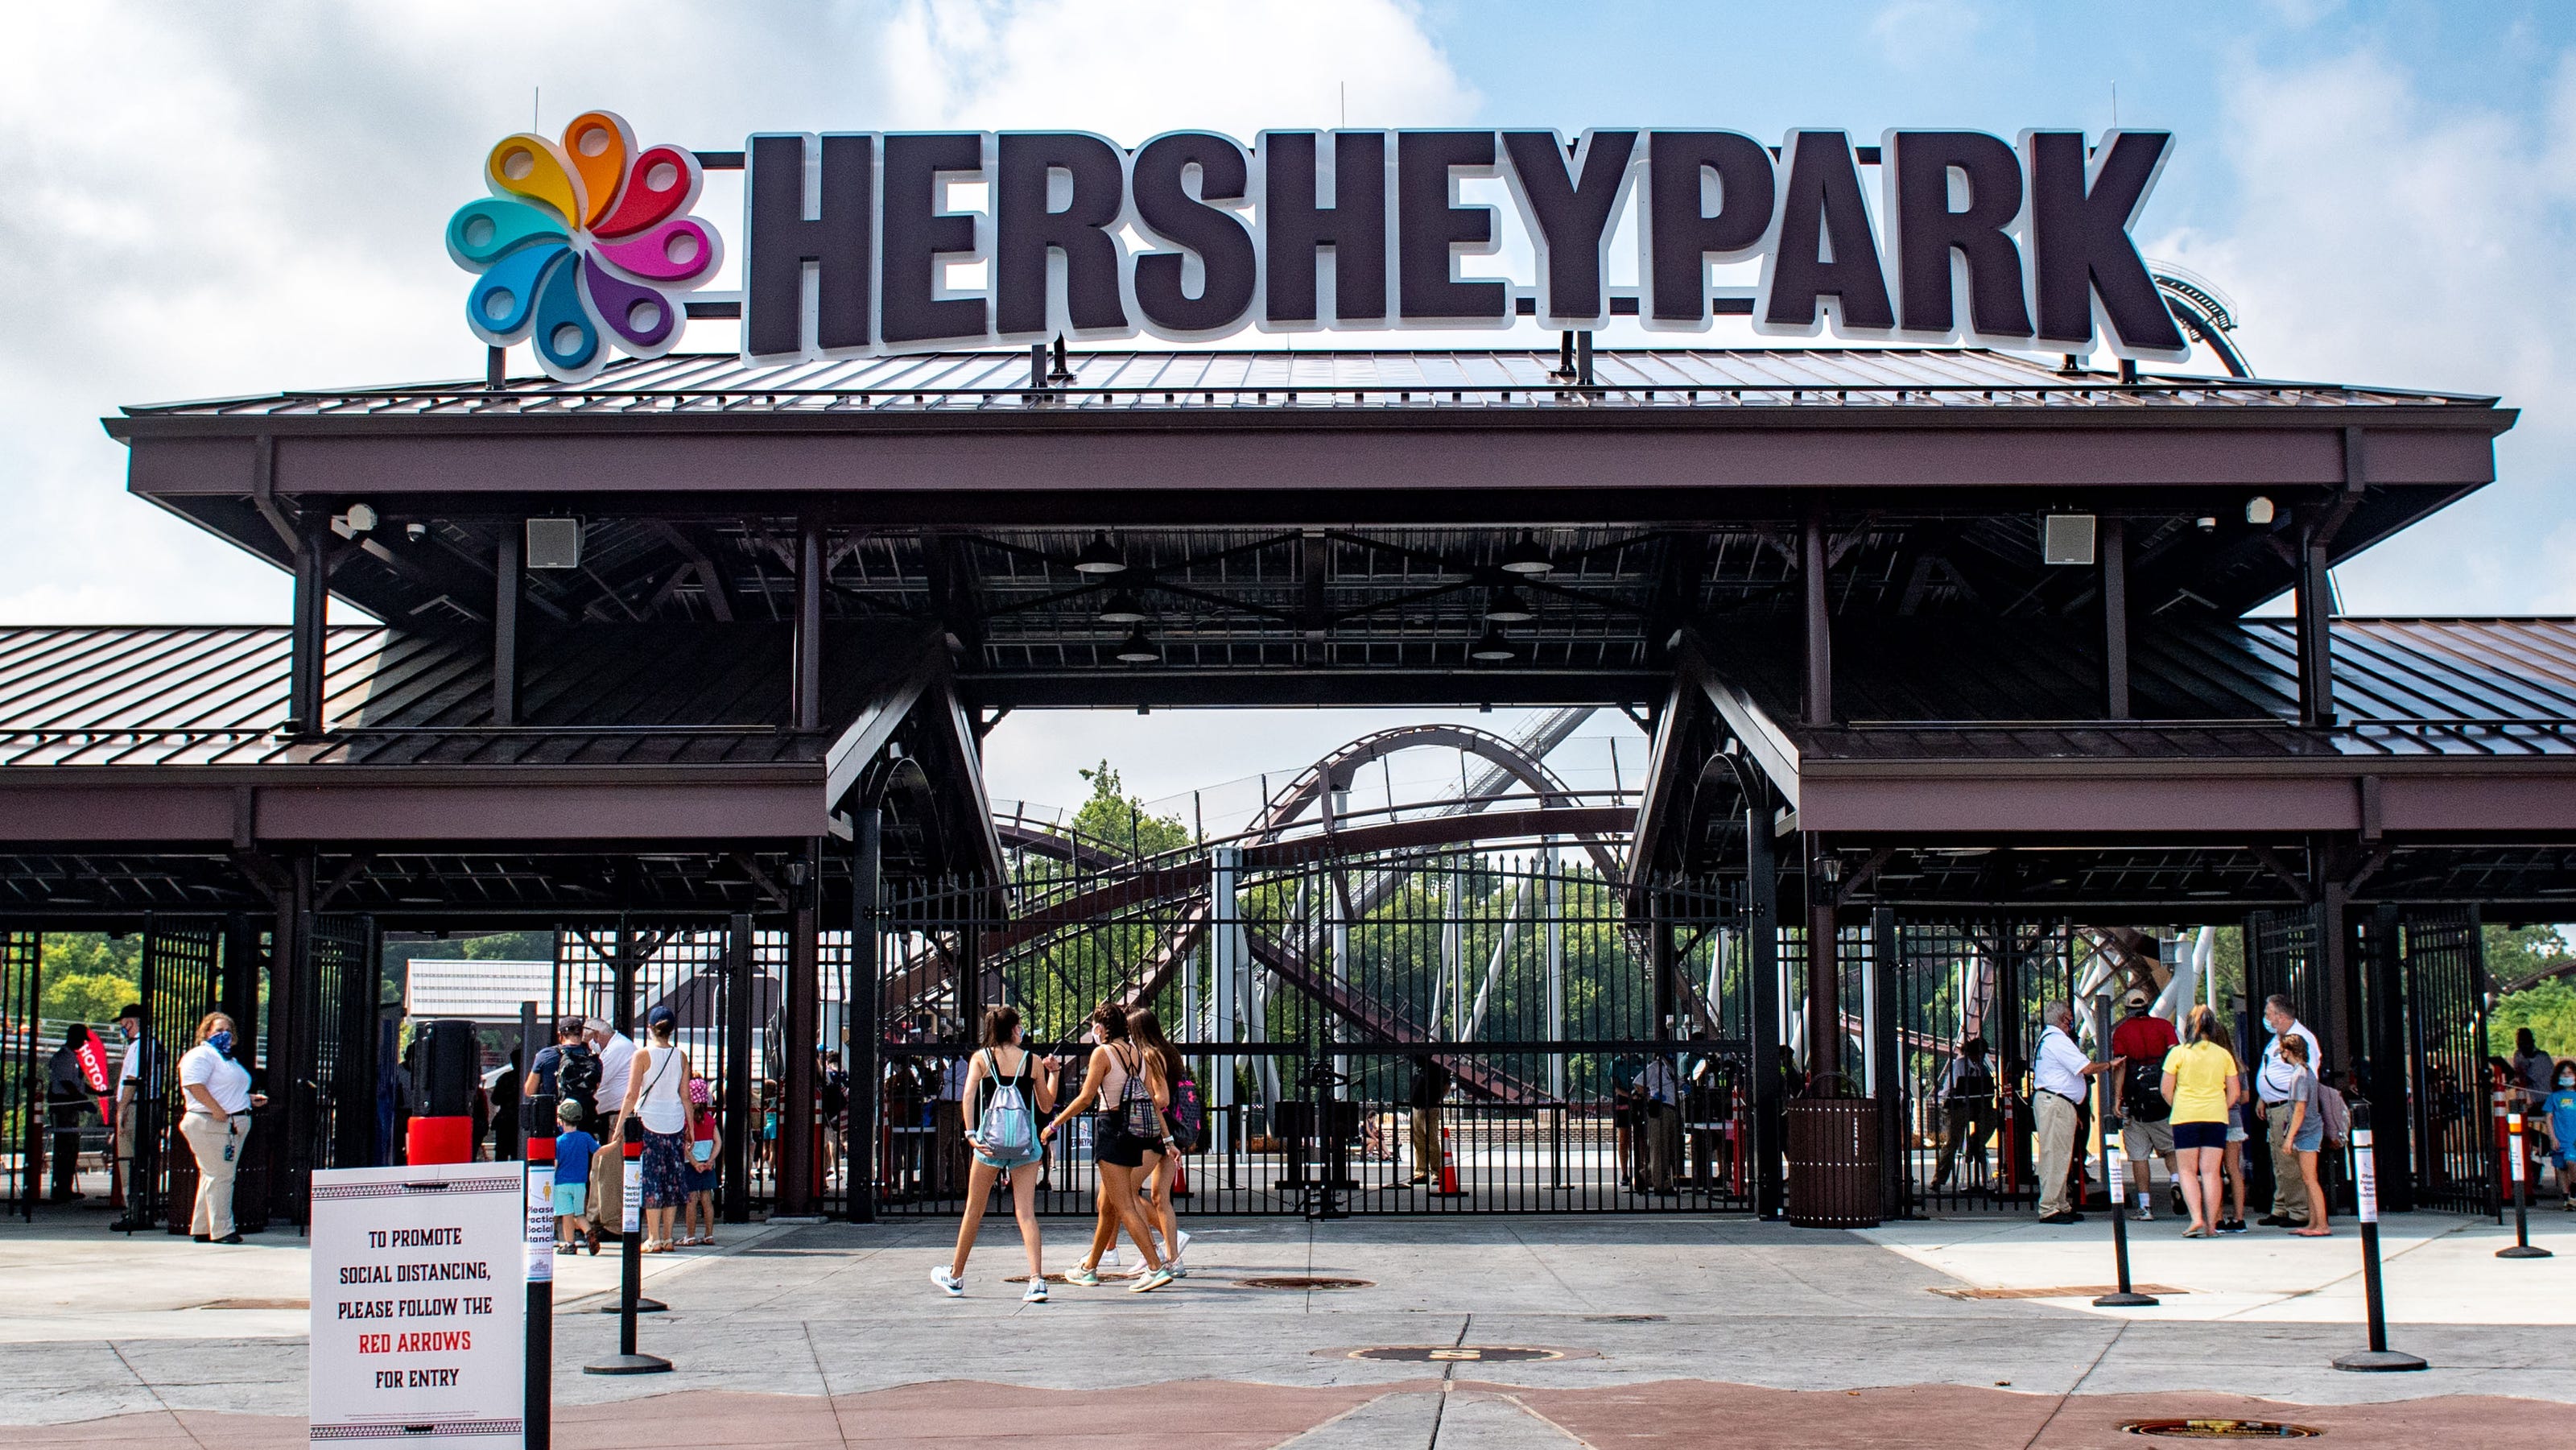 Hersheypark opens in Pennsylvania amid COVID-19